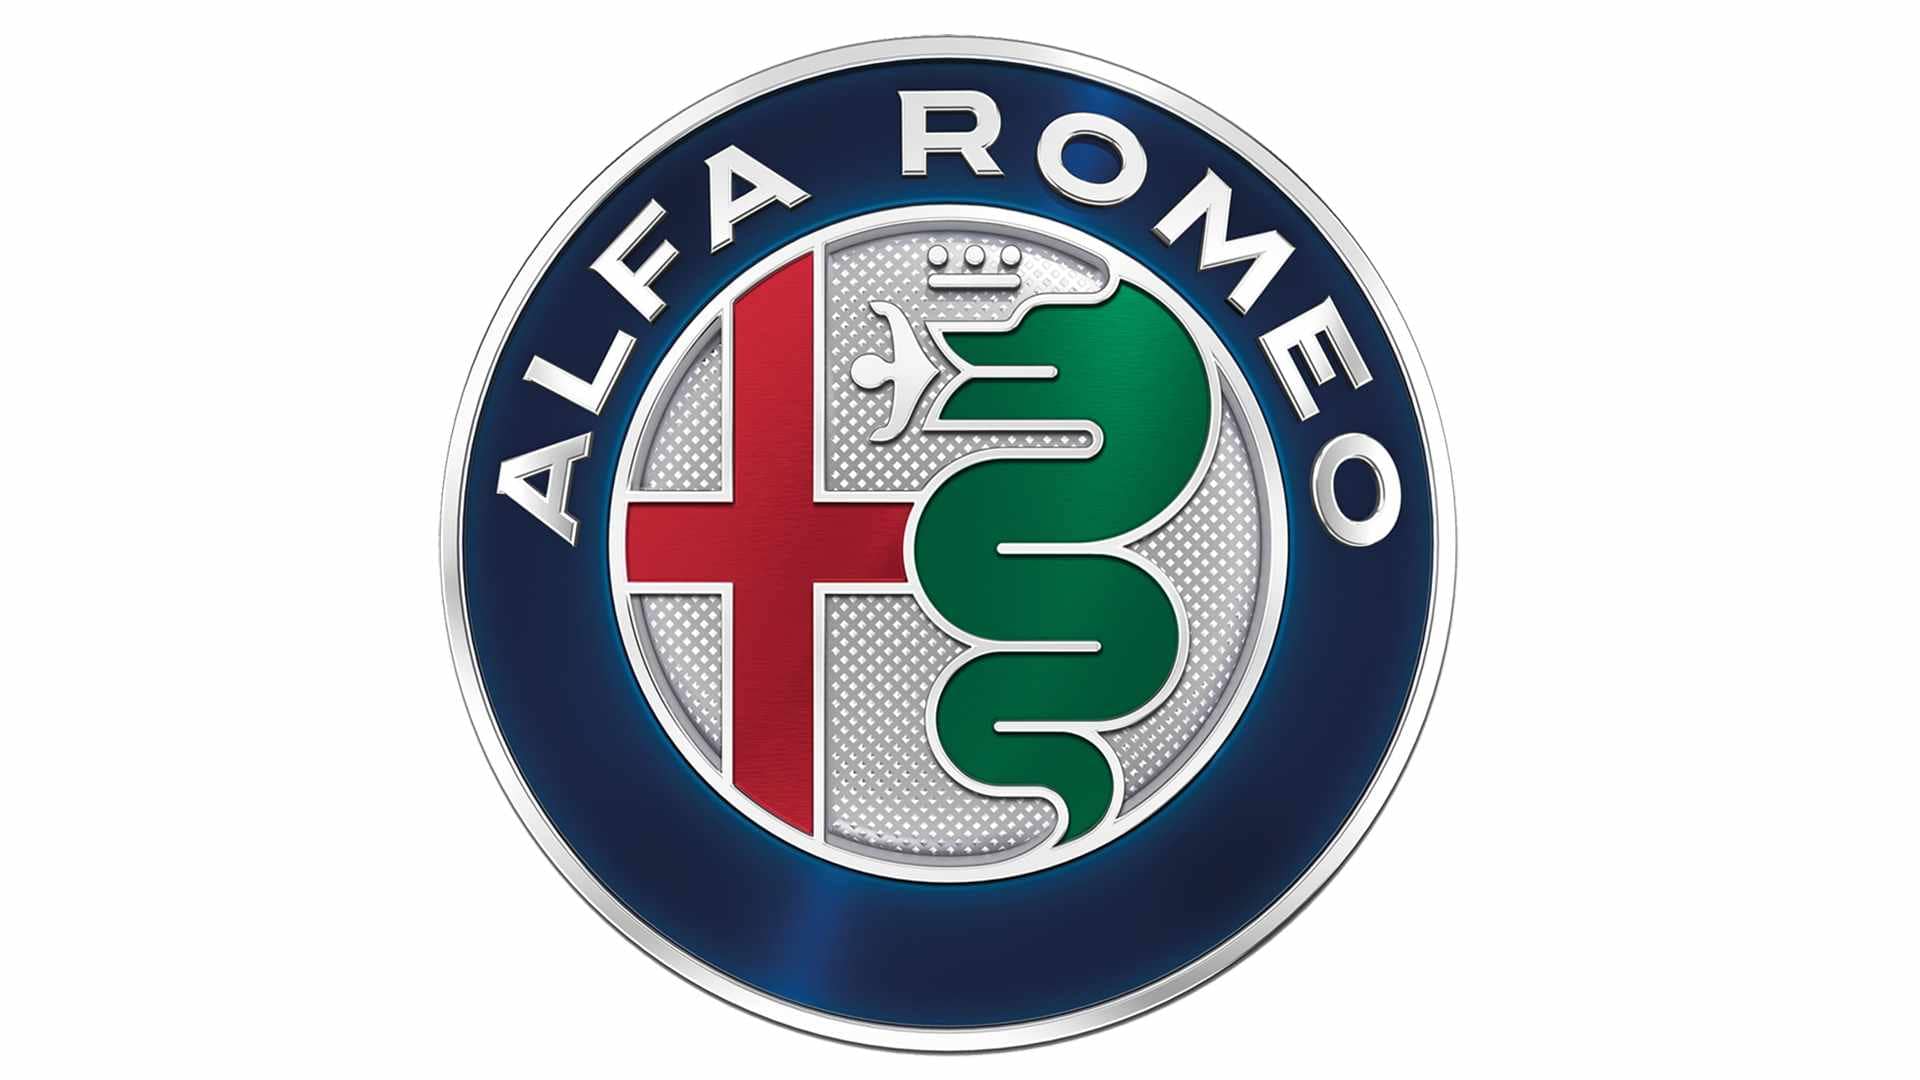 Mooi Verwarren Prehistorisch Alfa Romeo Logo and symbol, meaning, history, PNG, brand